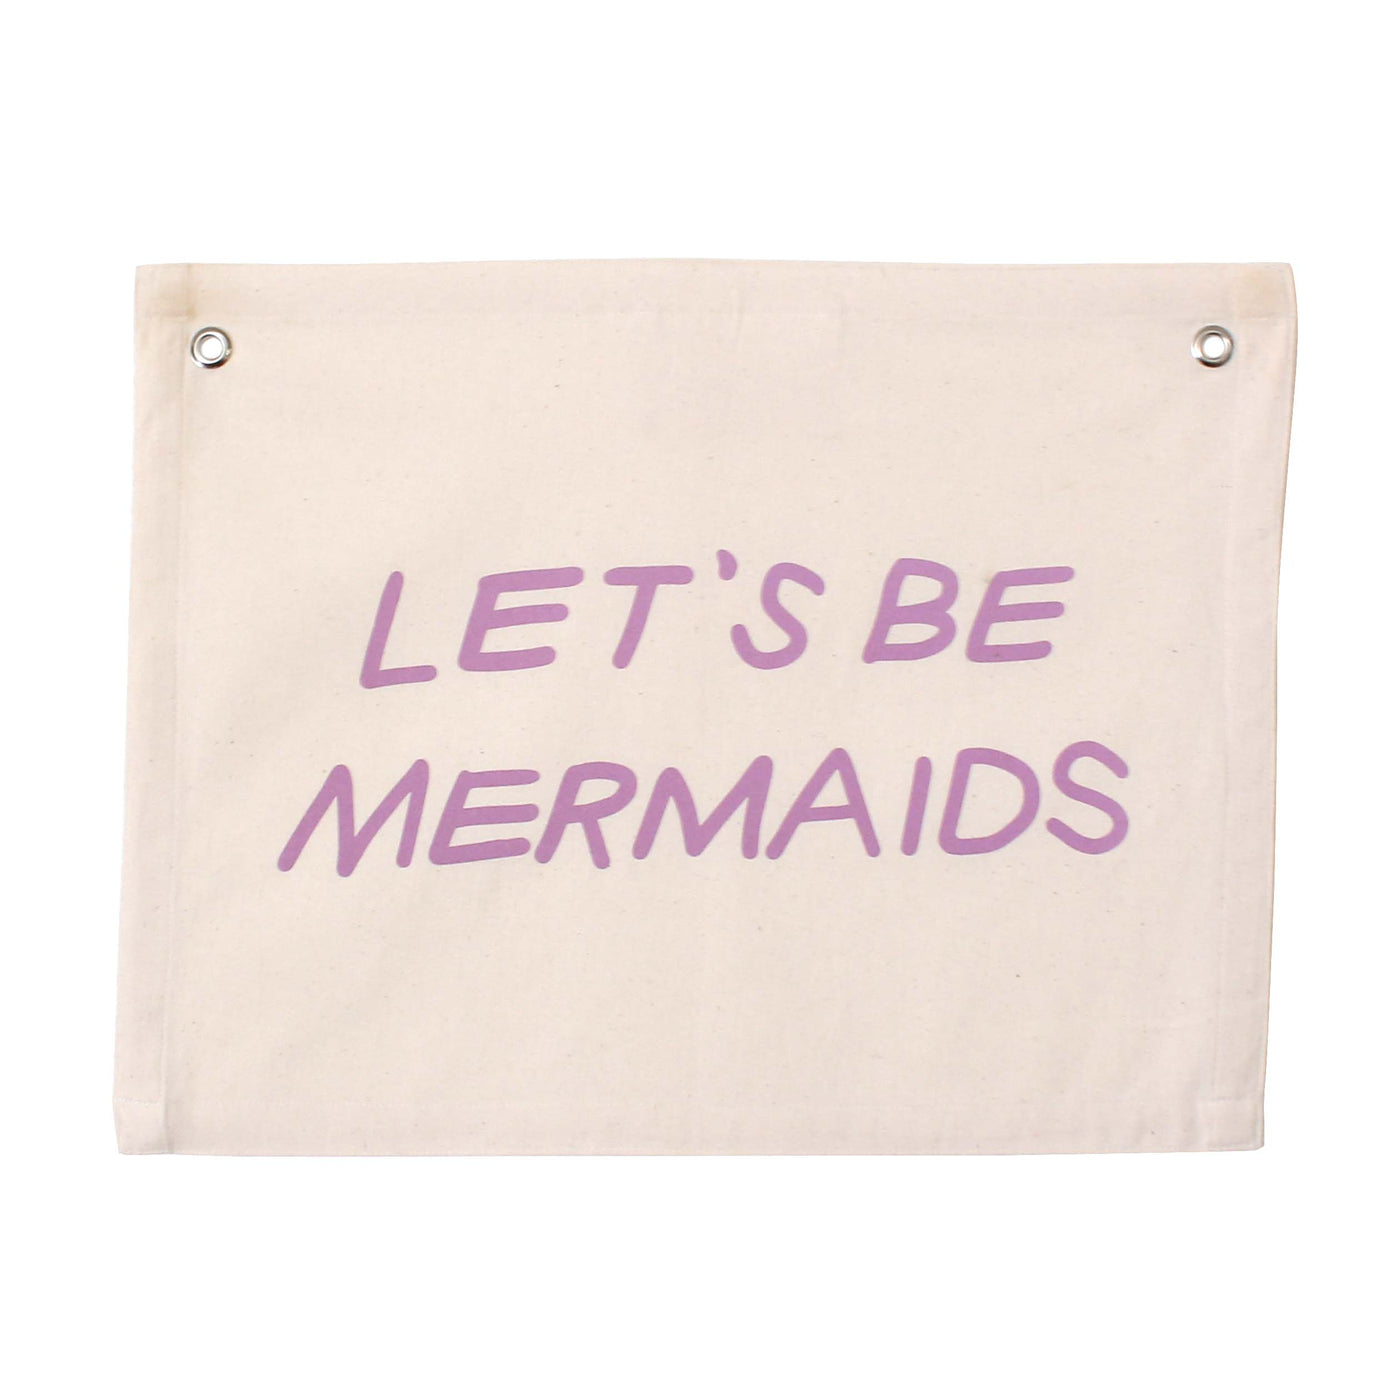 mermaid banner - Sweet Water Decor - Wall Hanging